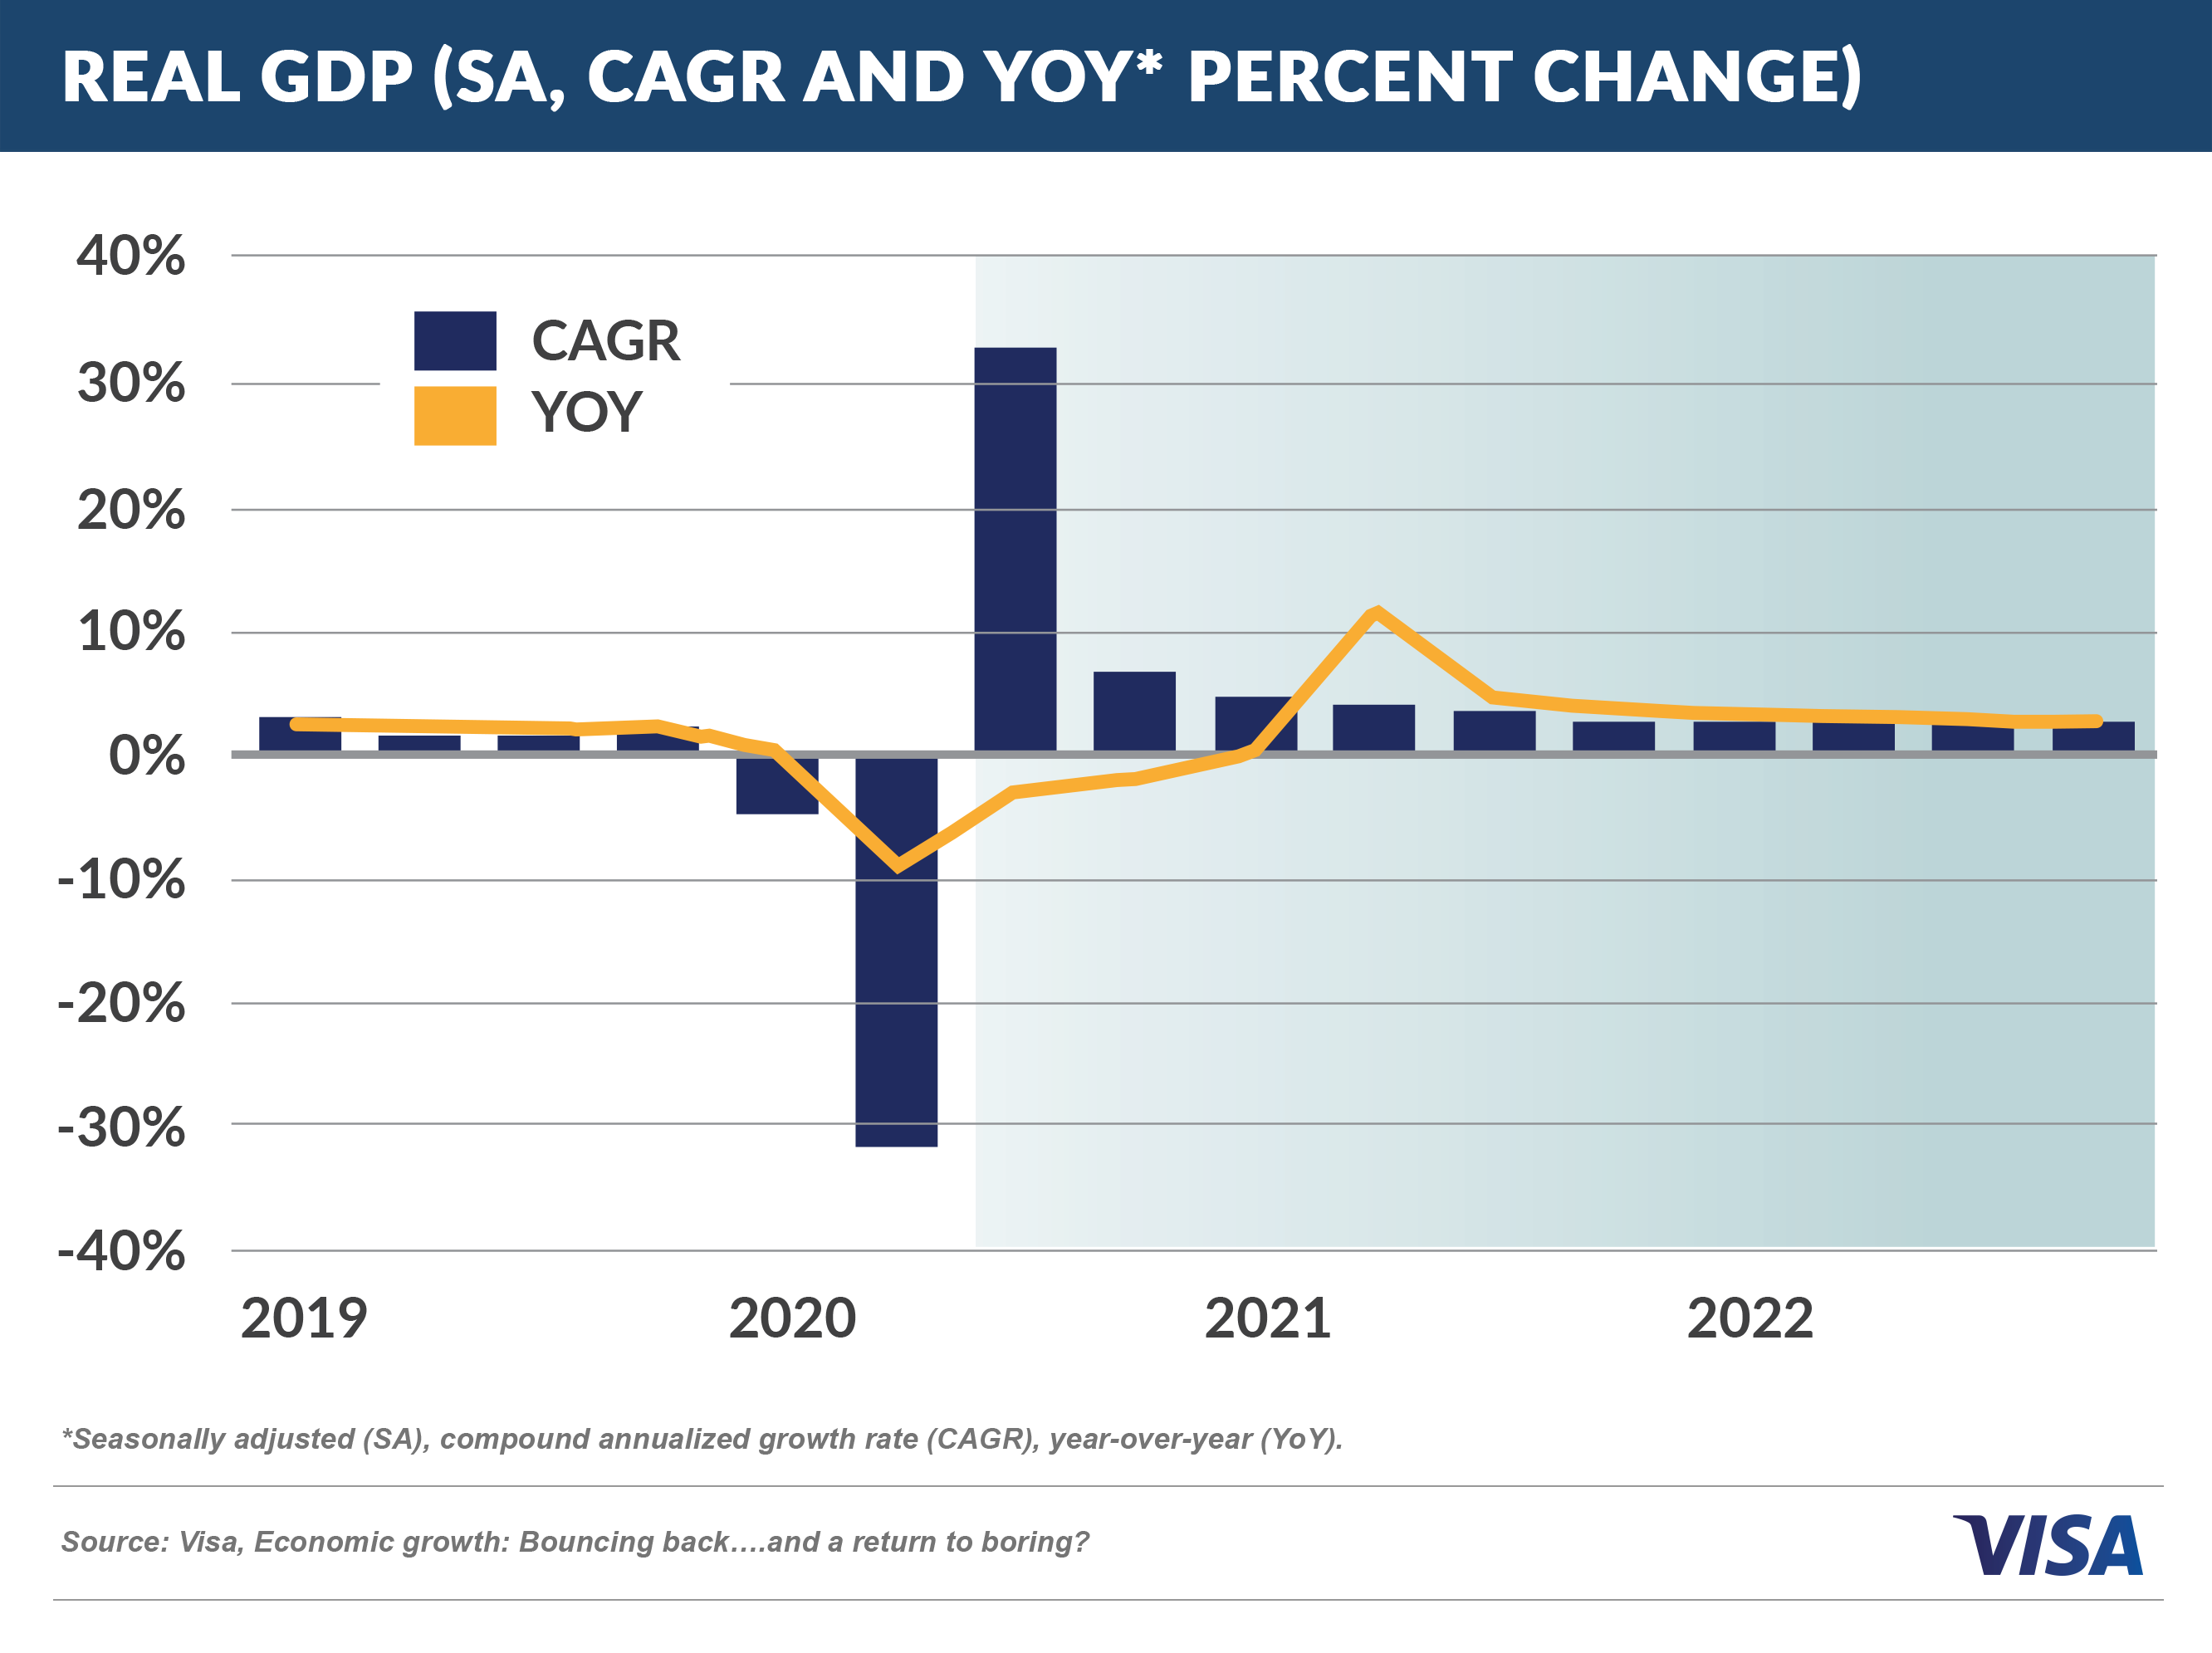 Real GDP - SA, CAGR, and YoY percent change